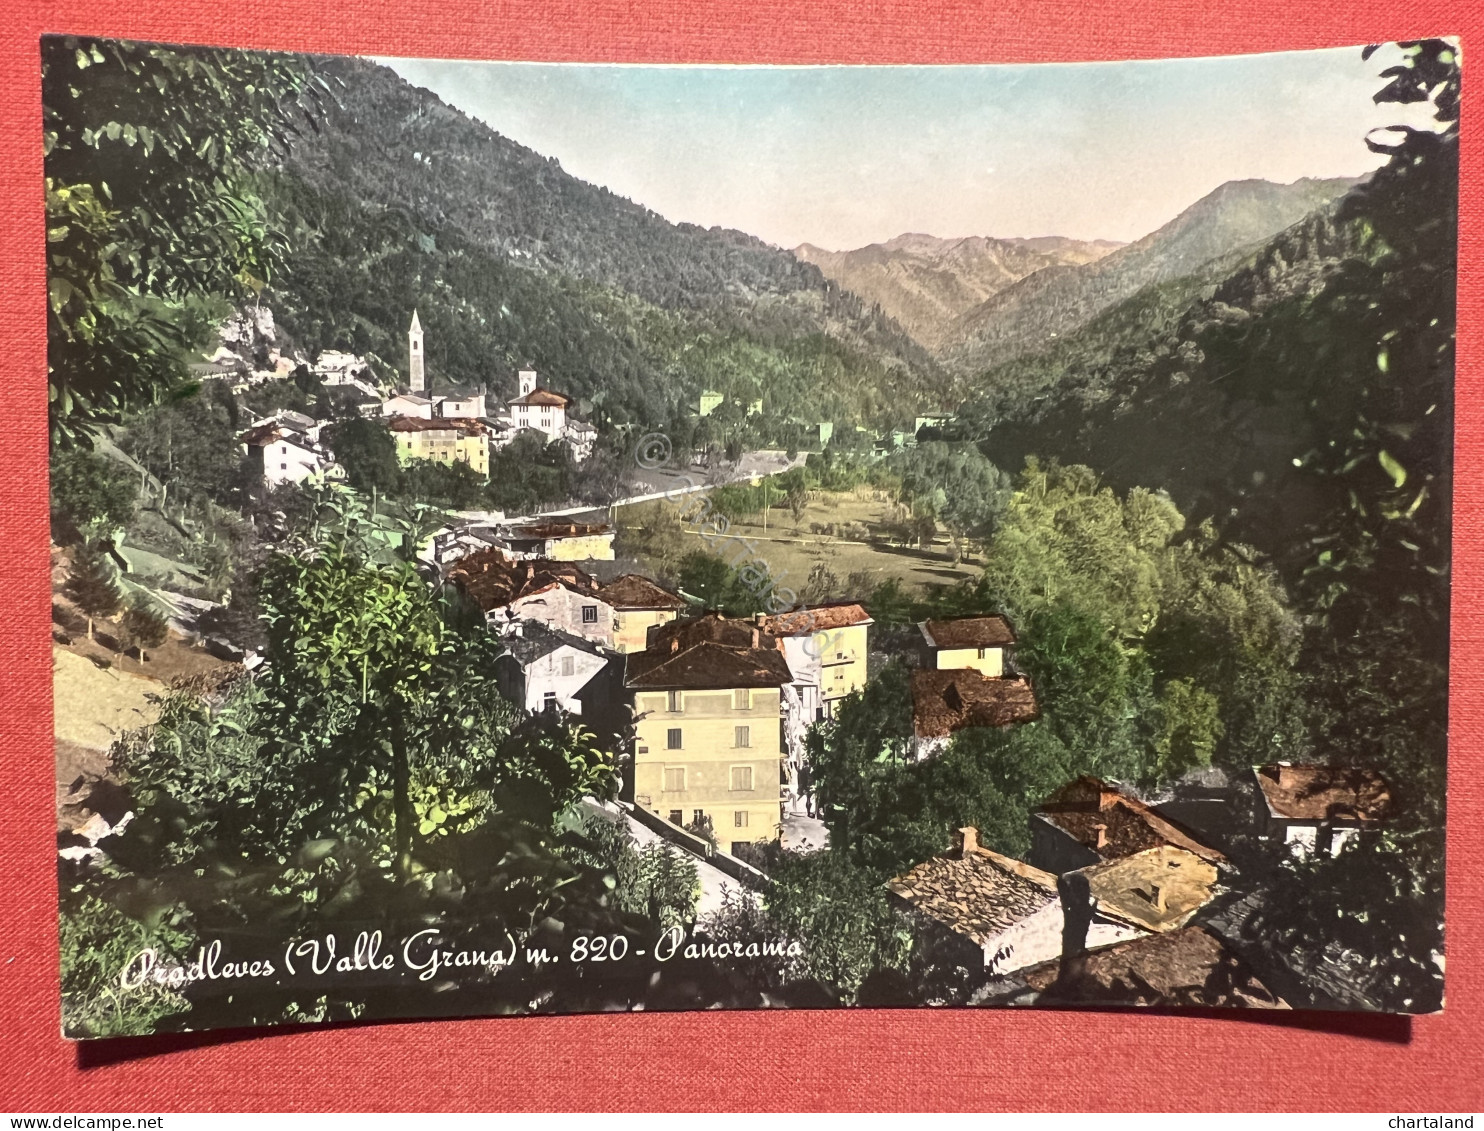 Cartolina - Pradleves - Valle Grana ( Cuneo ) - Panorama - 1955 - Cuneo